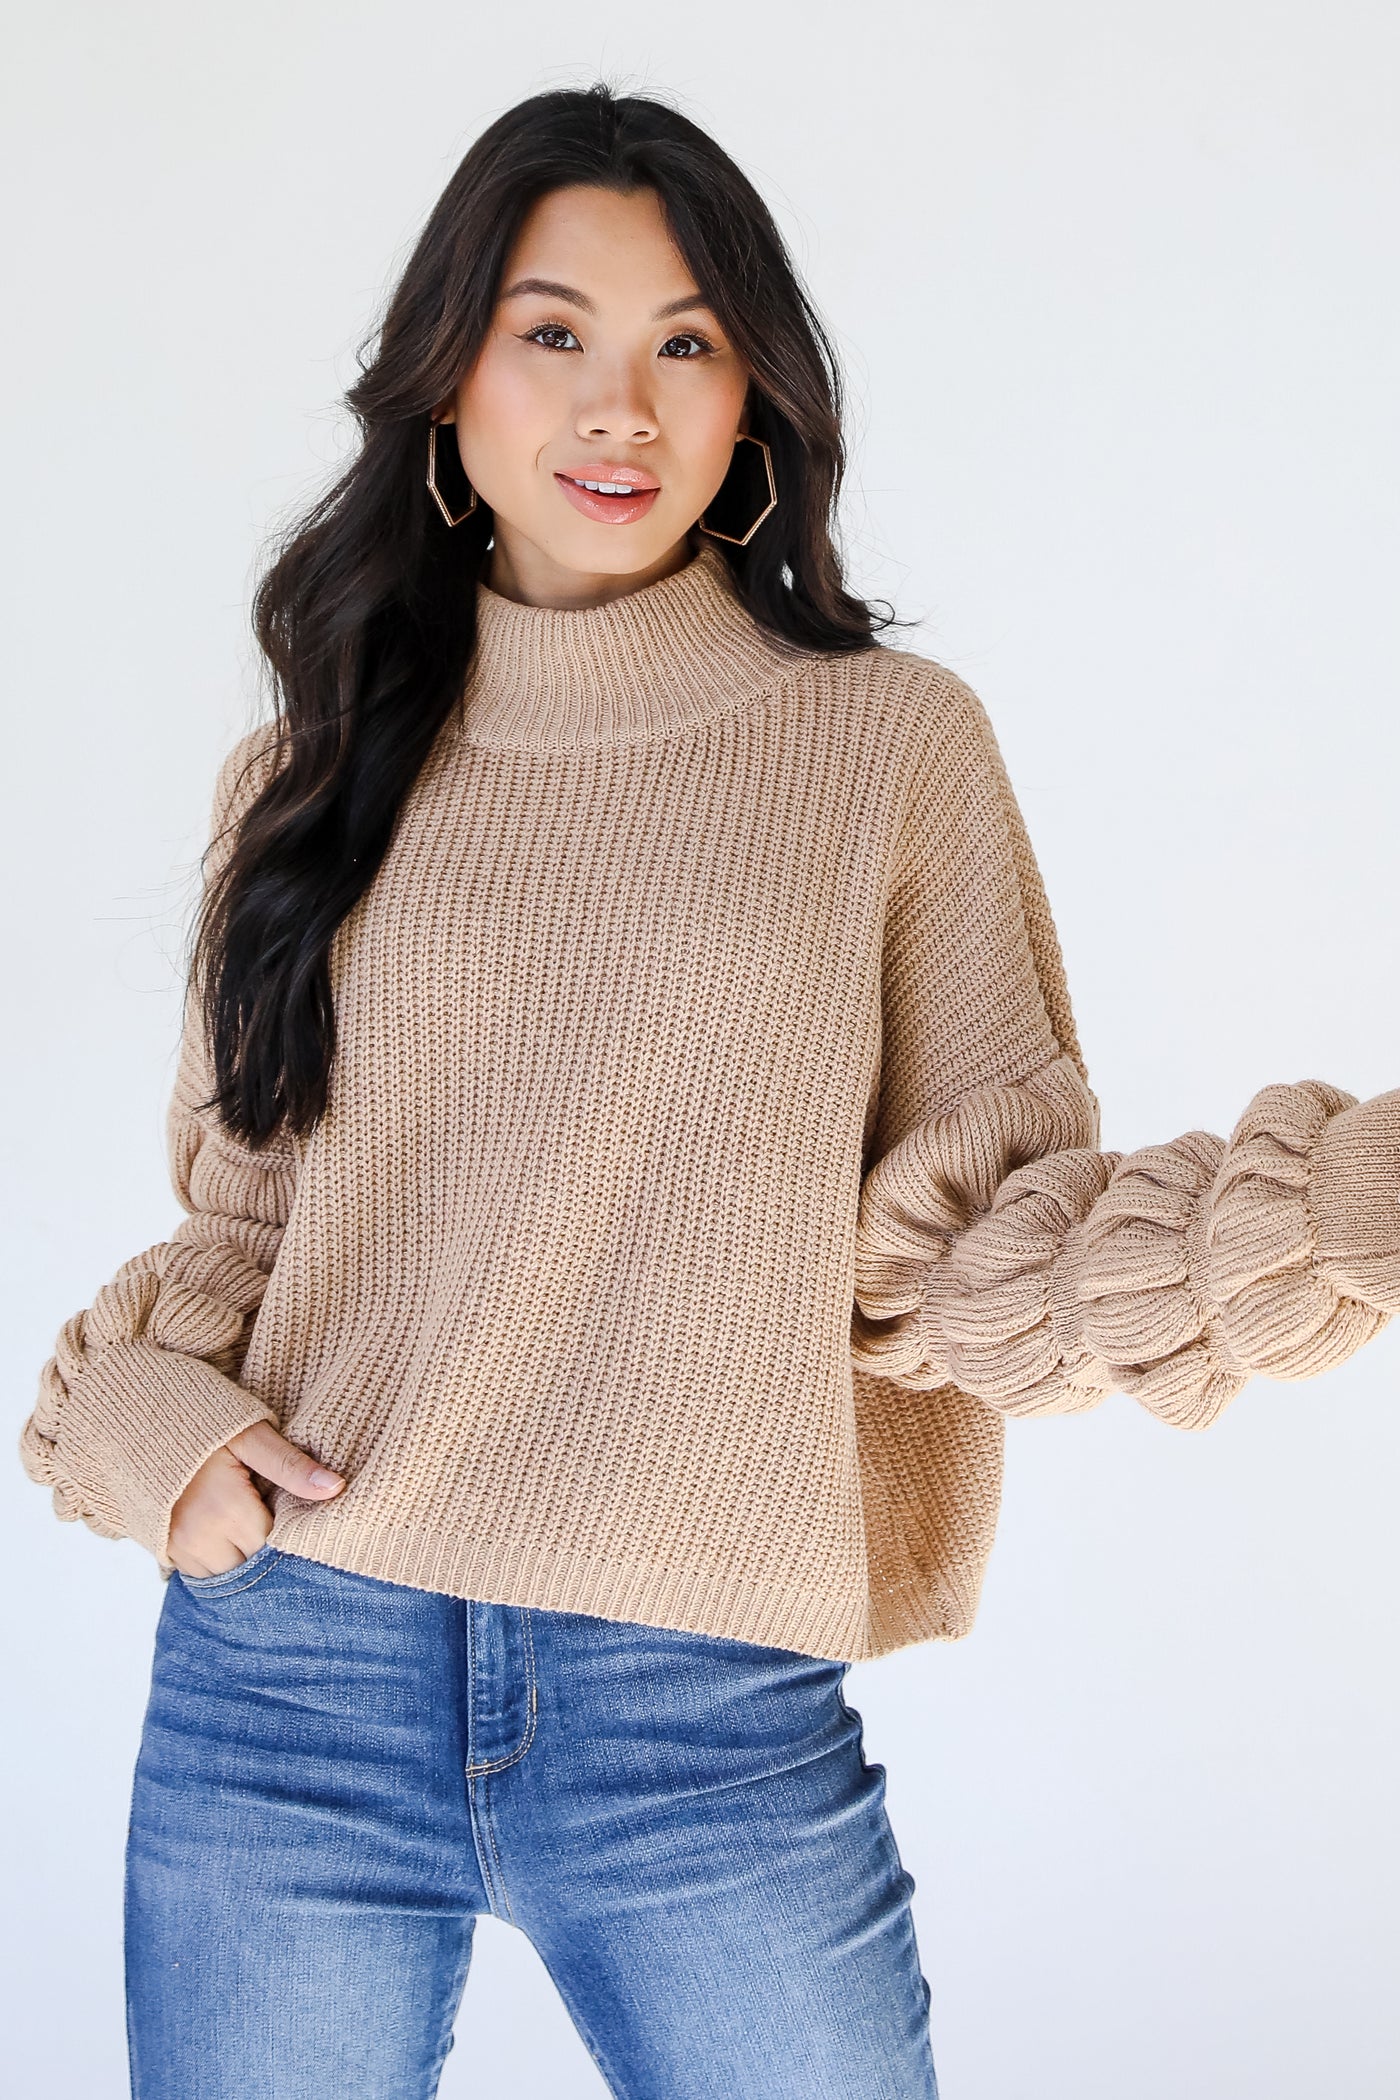 Statement Sleeve Sweater on model